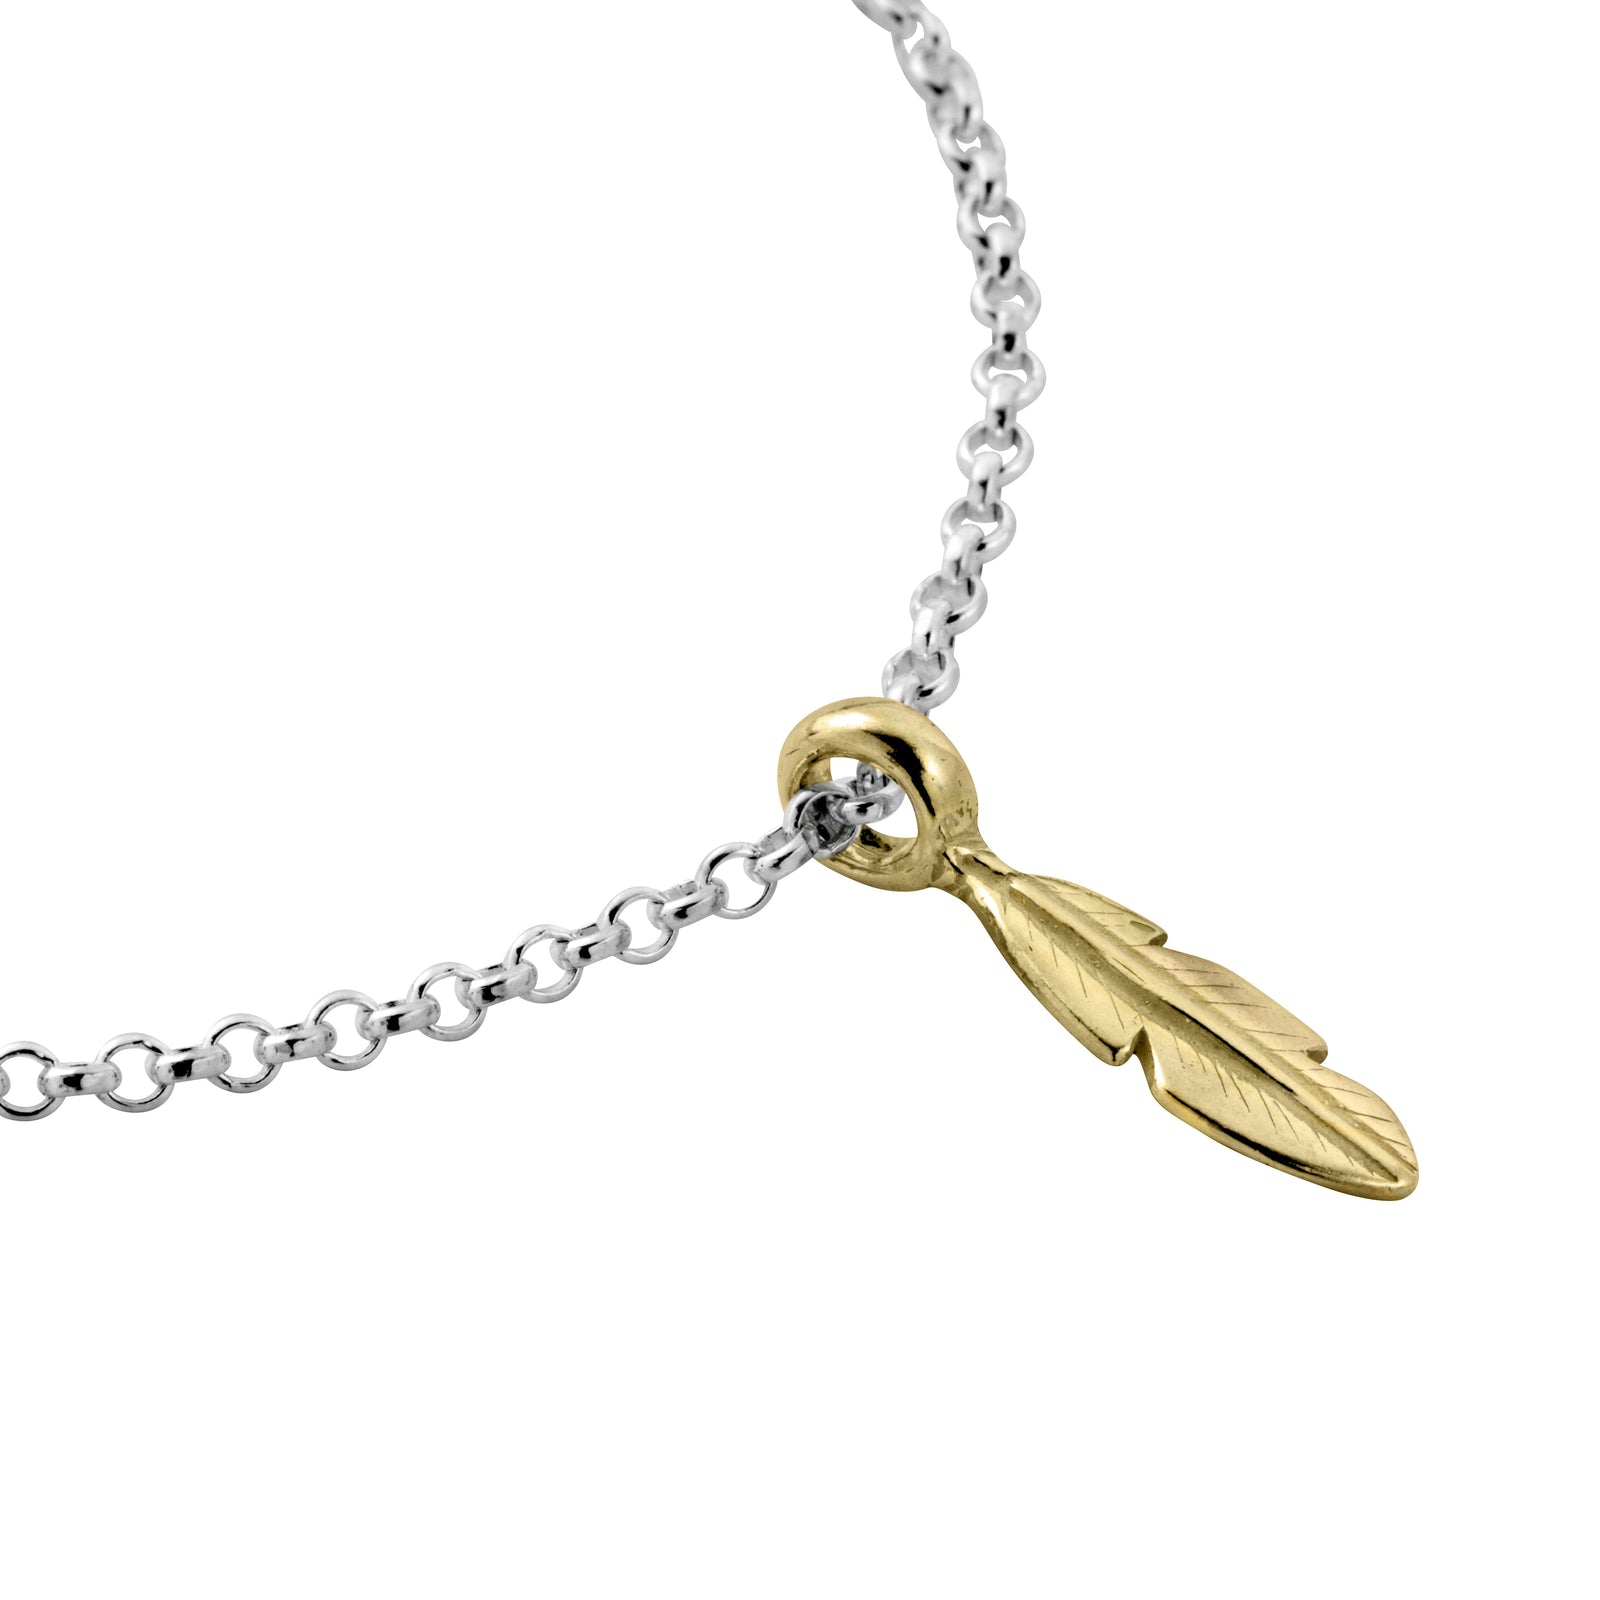 Silver & Gold Mini Feather Chain Bracelet